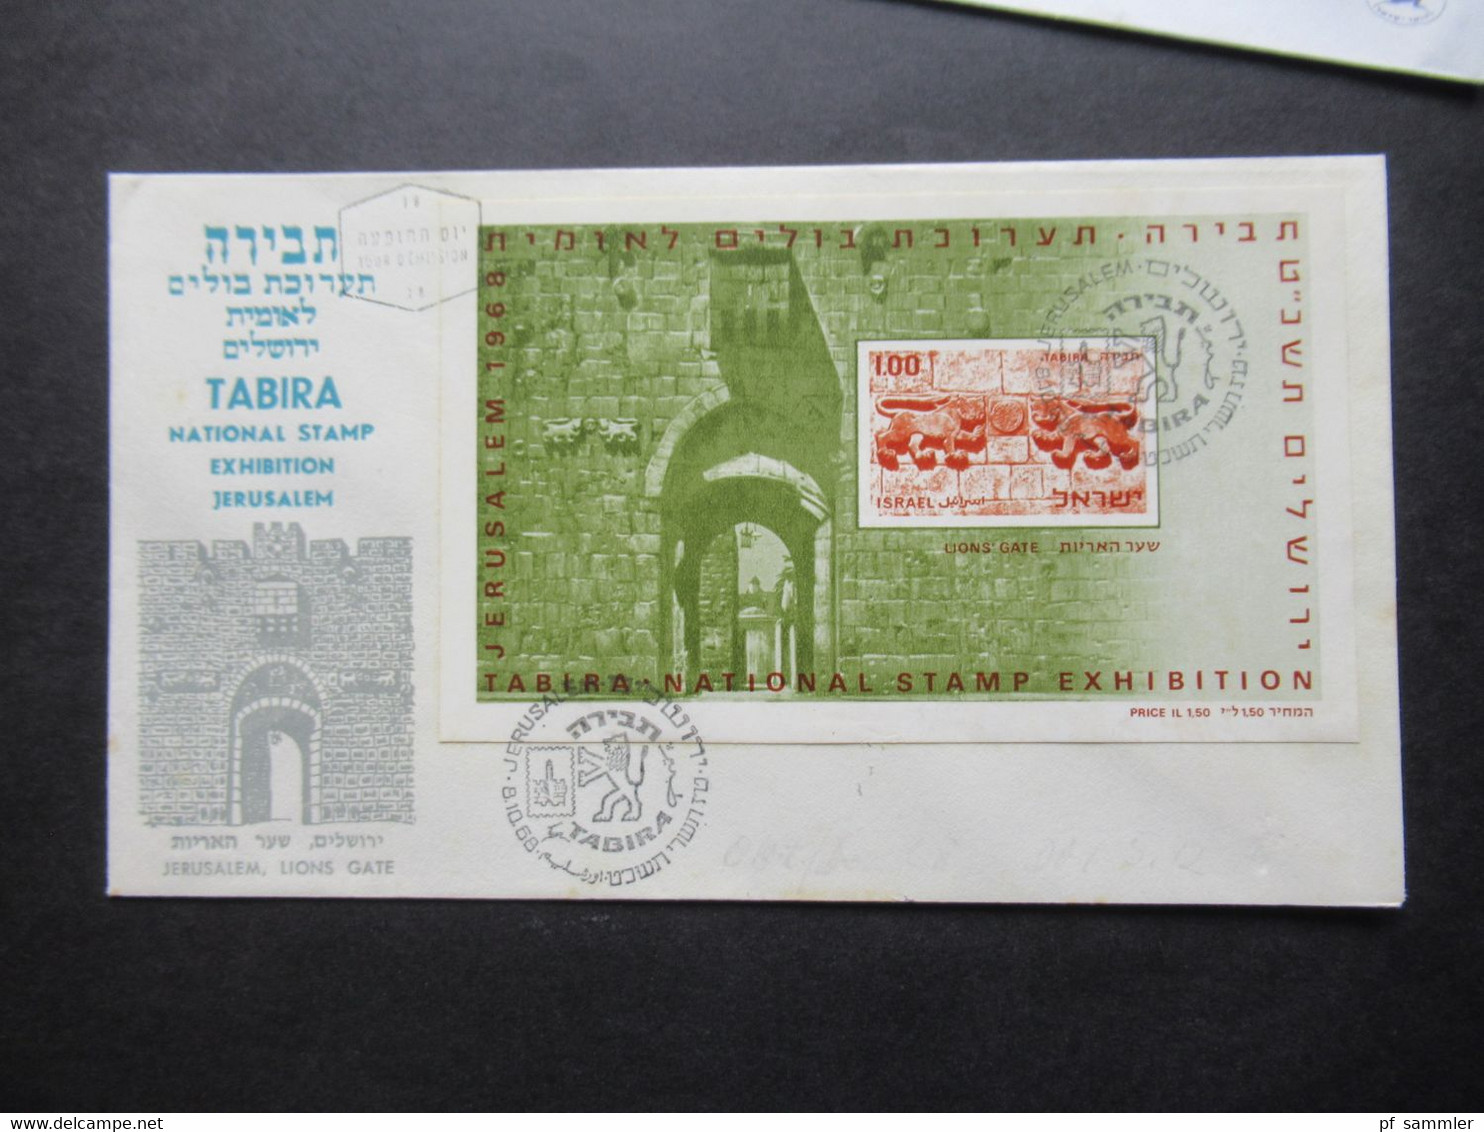 Israel 1970 Motivmarken 2x Block 2 Sonderbelege National Stamp Exhibition Tabit / Tabira / FDC ?? Jerusalem - Lettres & Documents